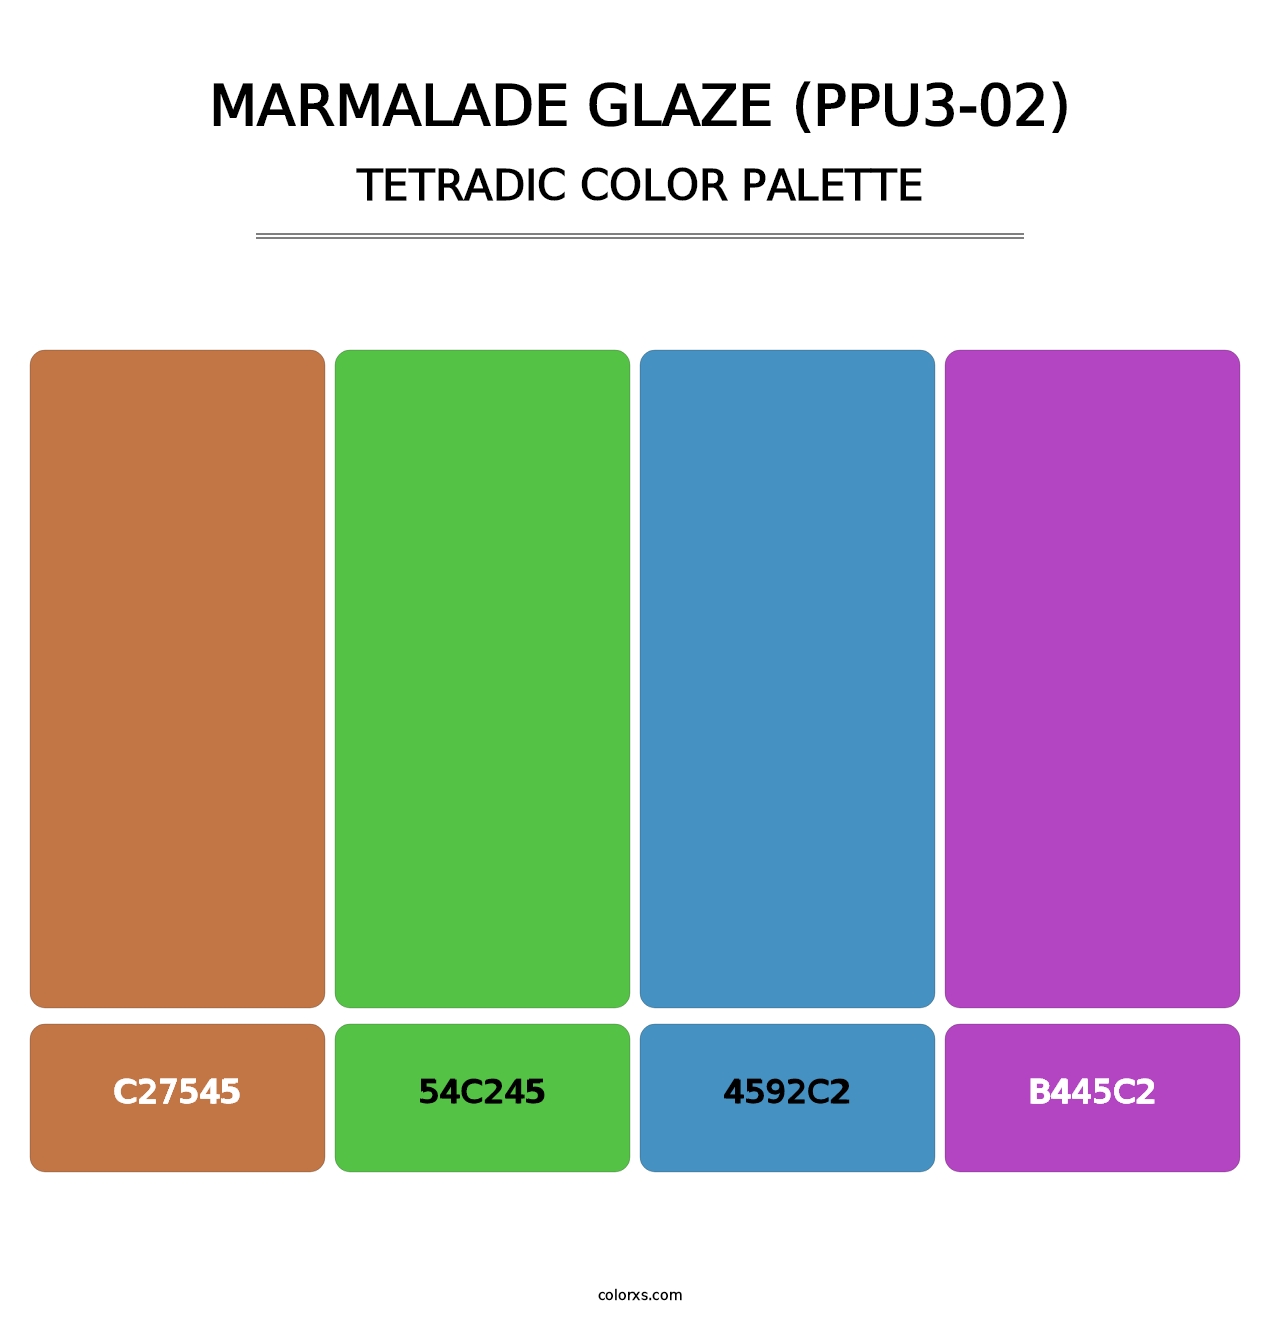 Marmalade Glaze (PPU3-02) - Tetradic Color Palette